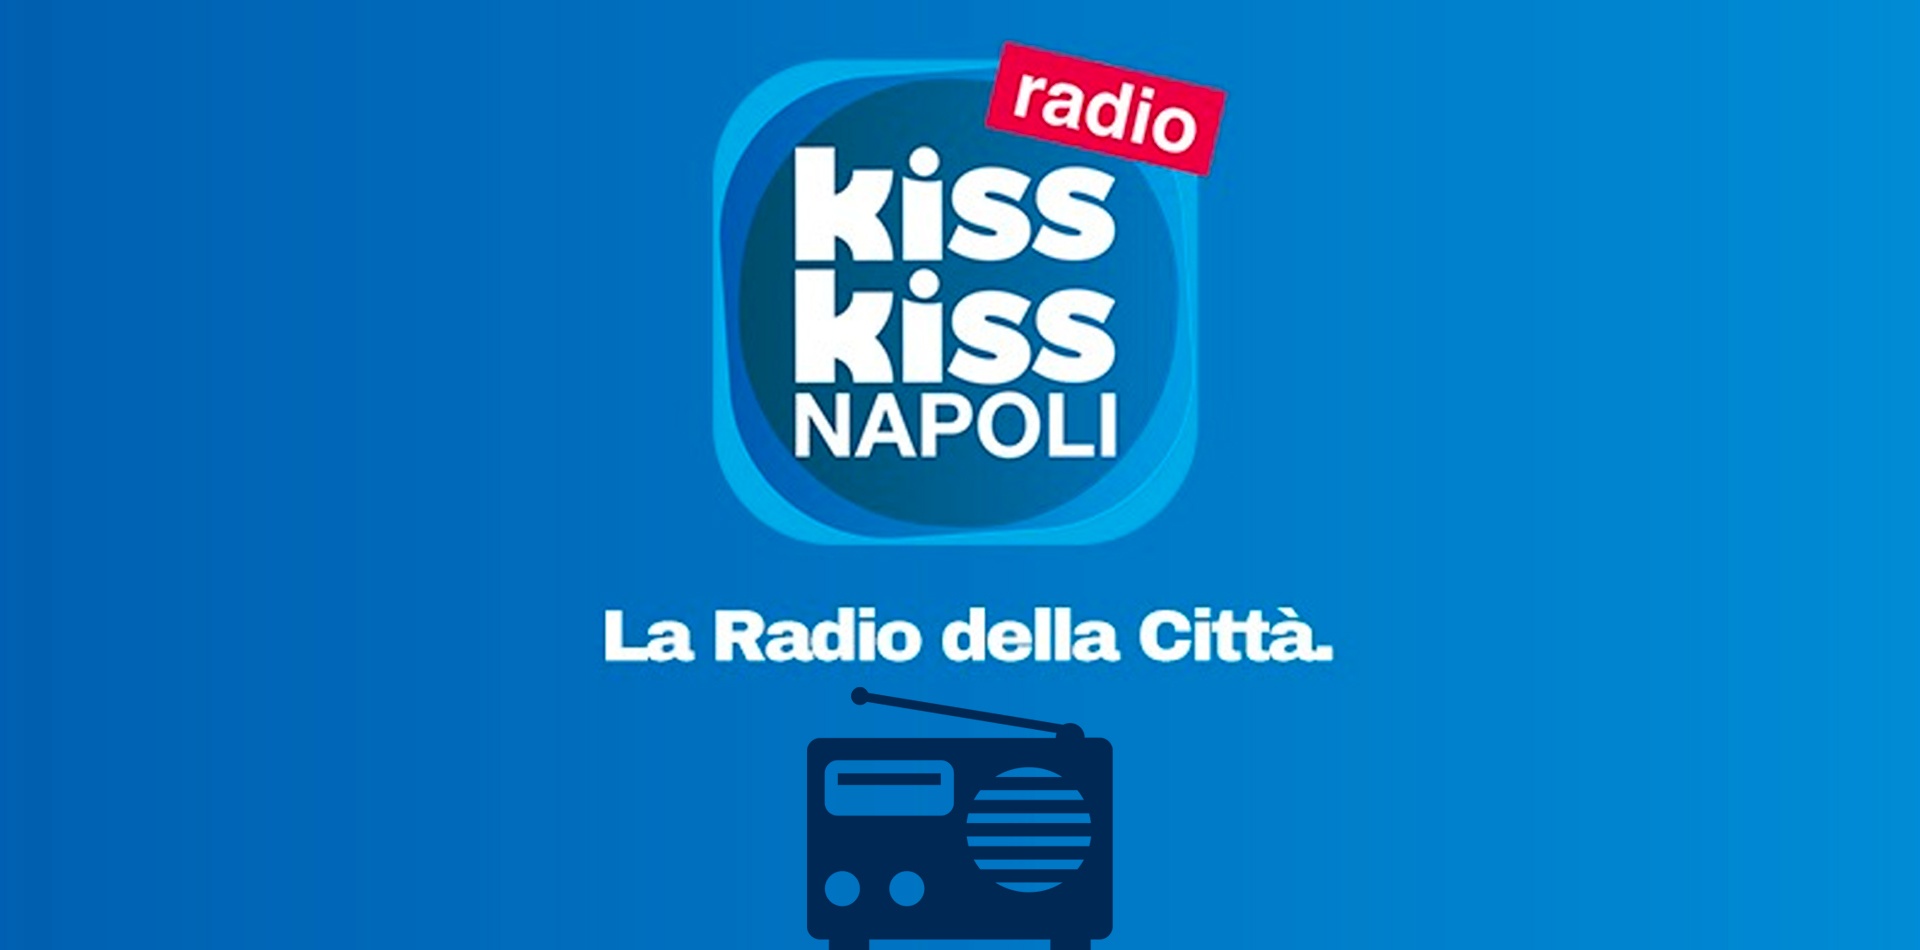 radio kiss kiss napoli streaming tv diretta frequenze frequenza sscnapoli calcionapoli